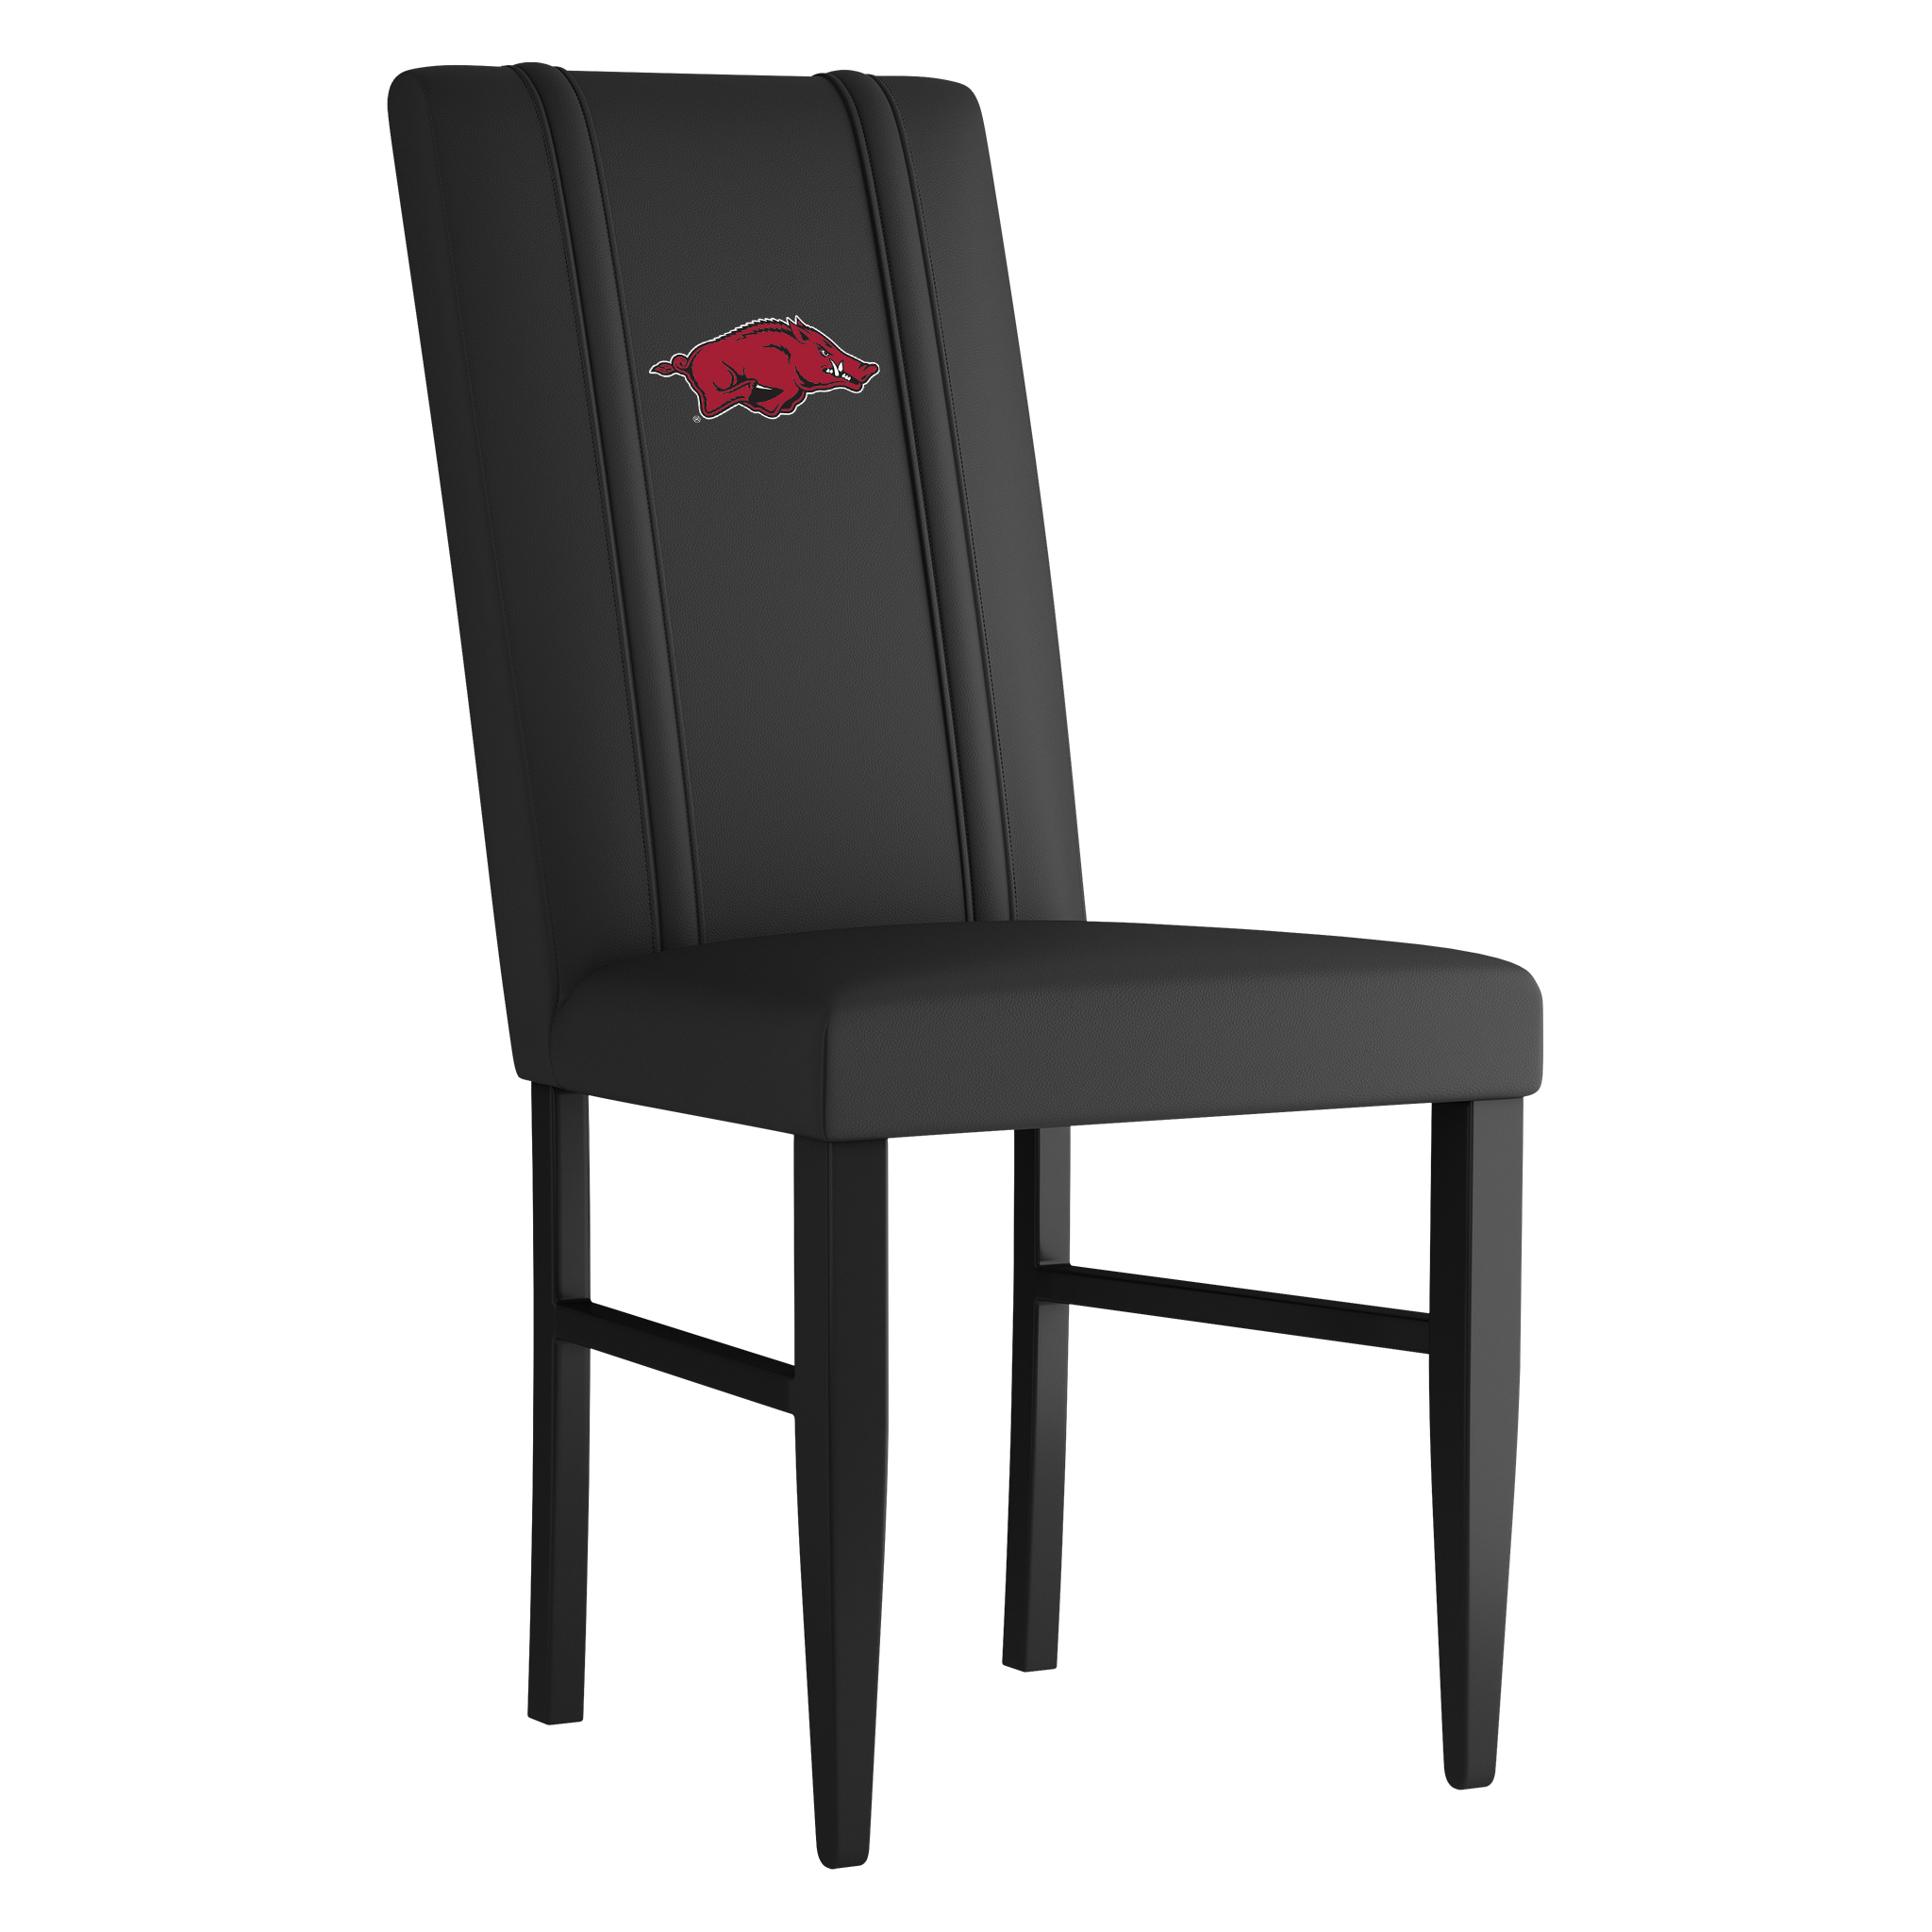 Arkansas Razorbacks Side Chair 2000 With Arkansas Razorbacks Logo